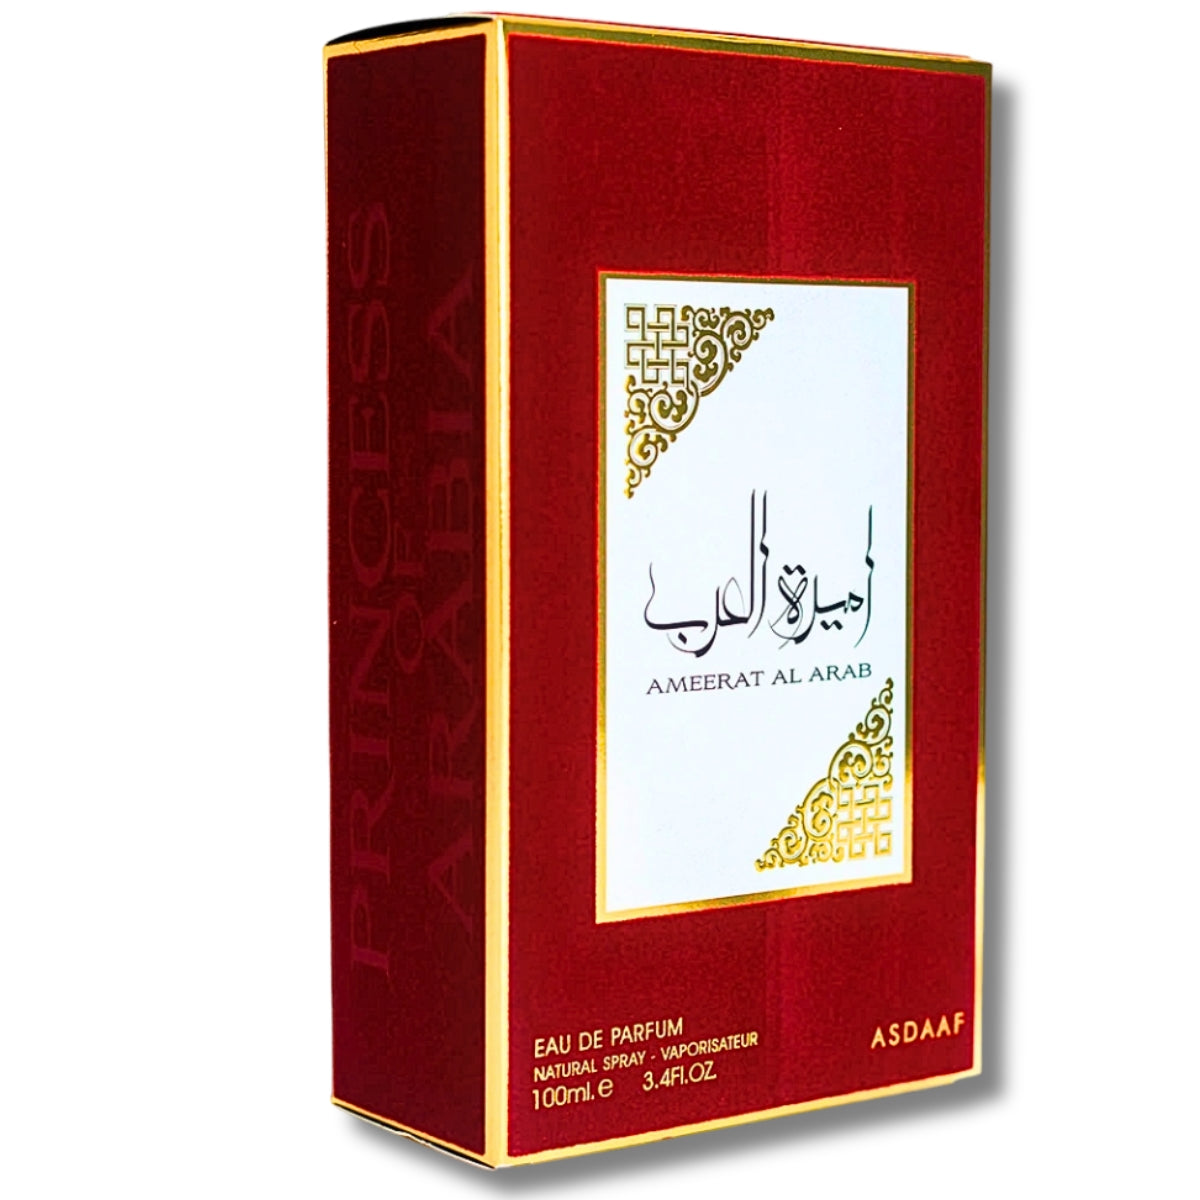 Asdaaf perfume Ameerat Al Arab Eau de Parfum 100ml